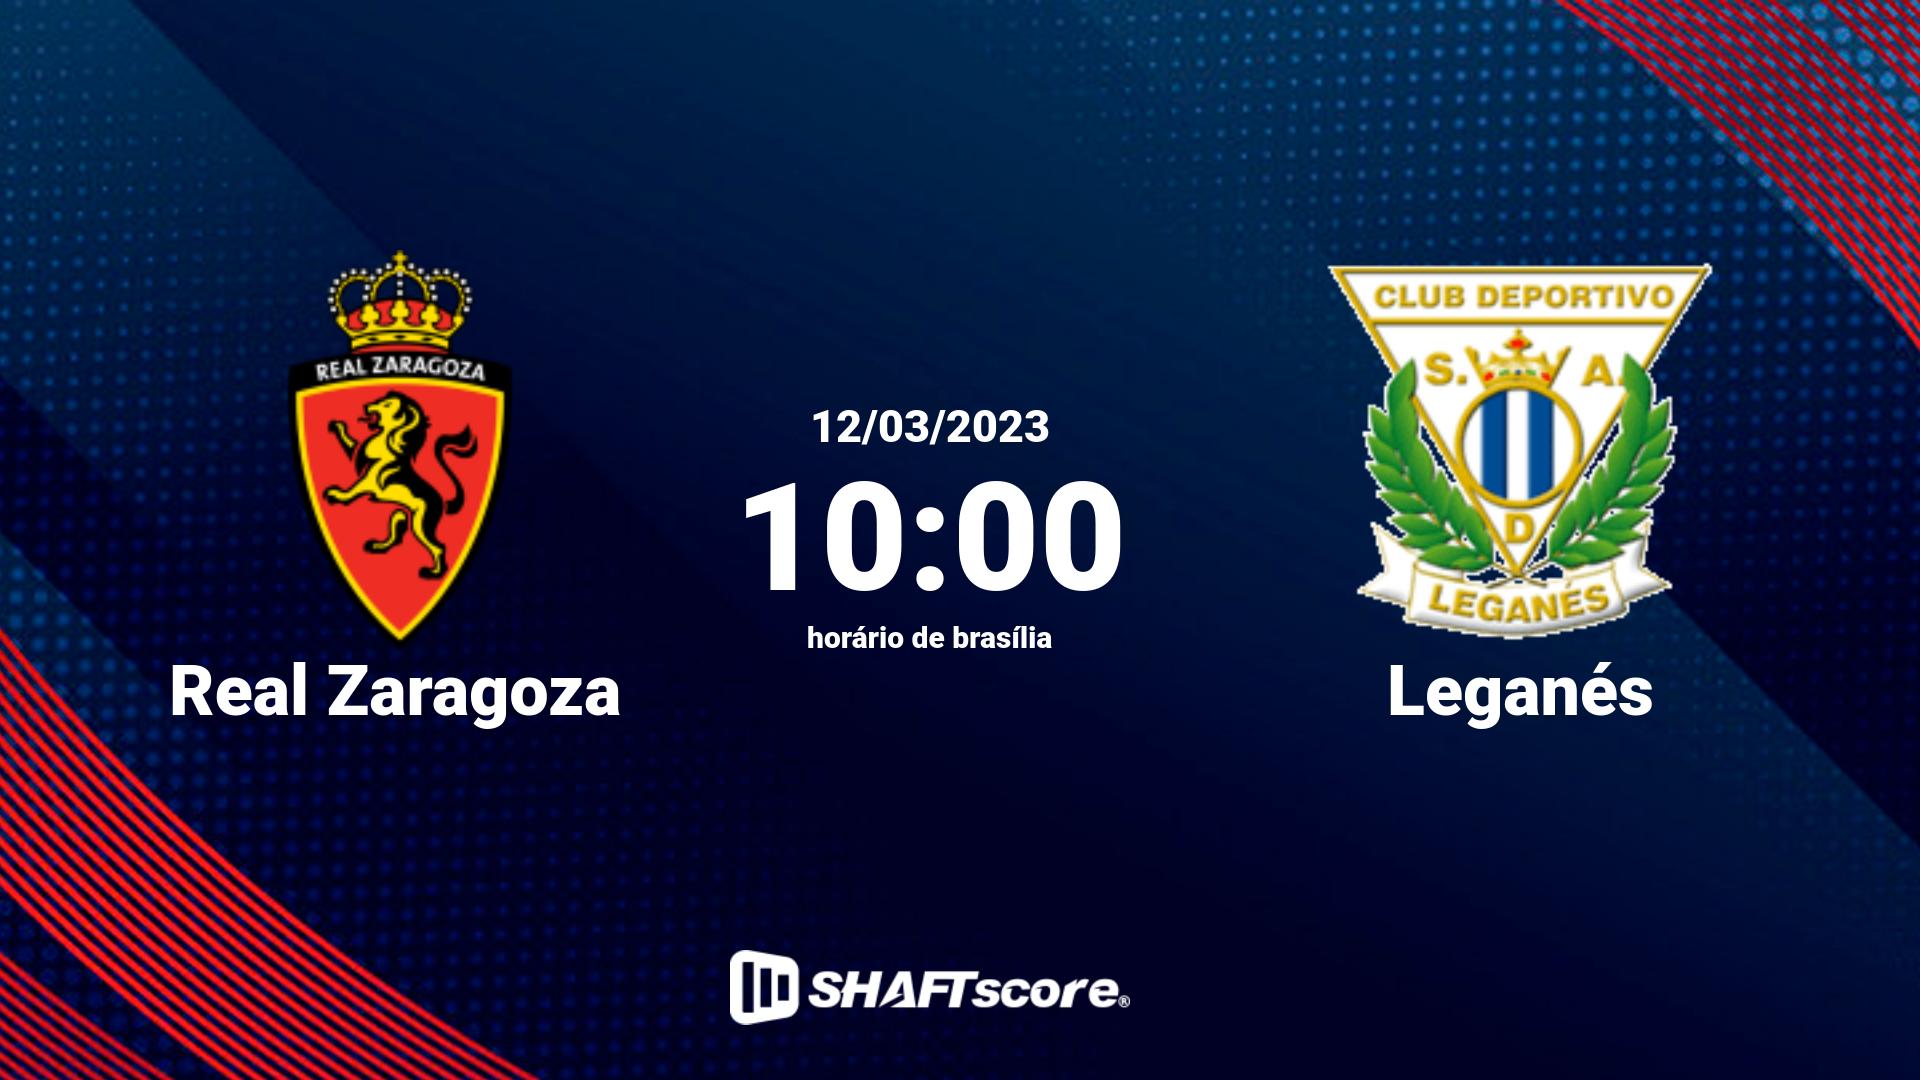 Estatísticas do jogo Real Zaragoza vs Leganés 12.03 10:00